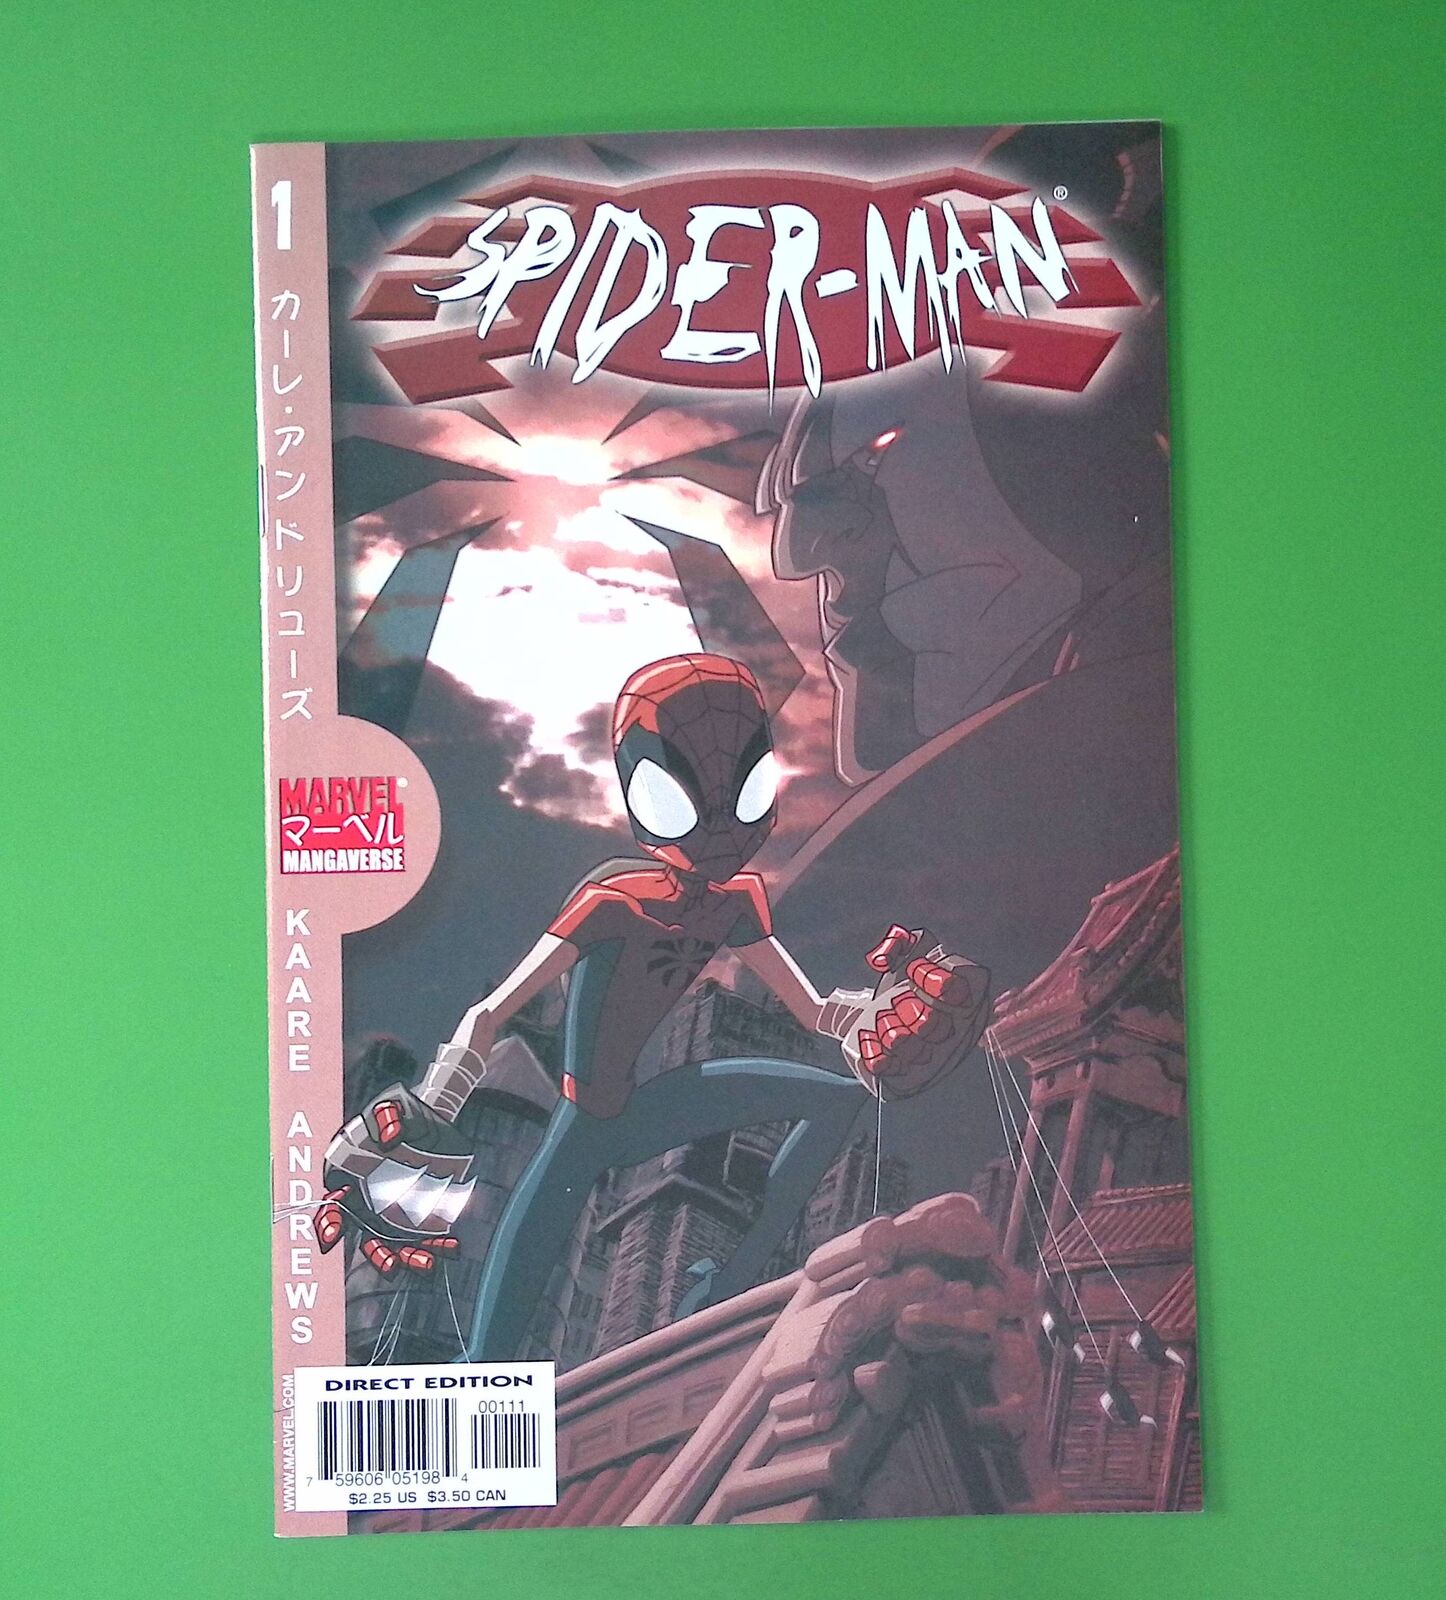 MARVEL MANGAVERSE: SPIDER-MAN #1 ONE-SHOT HIGH GRADE MARVEL COMIC BOOK TS34-168